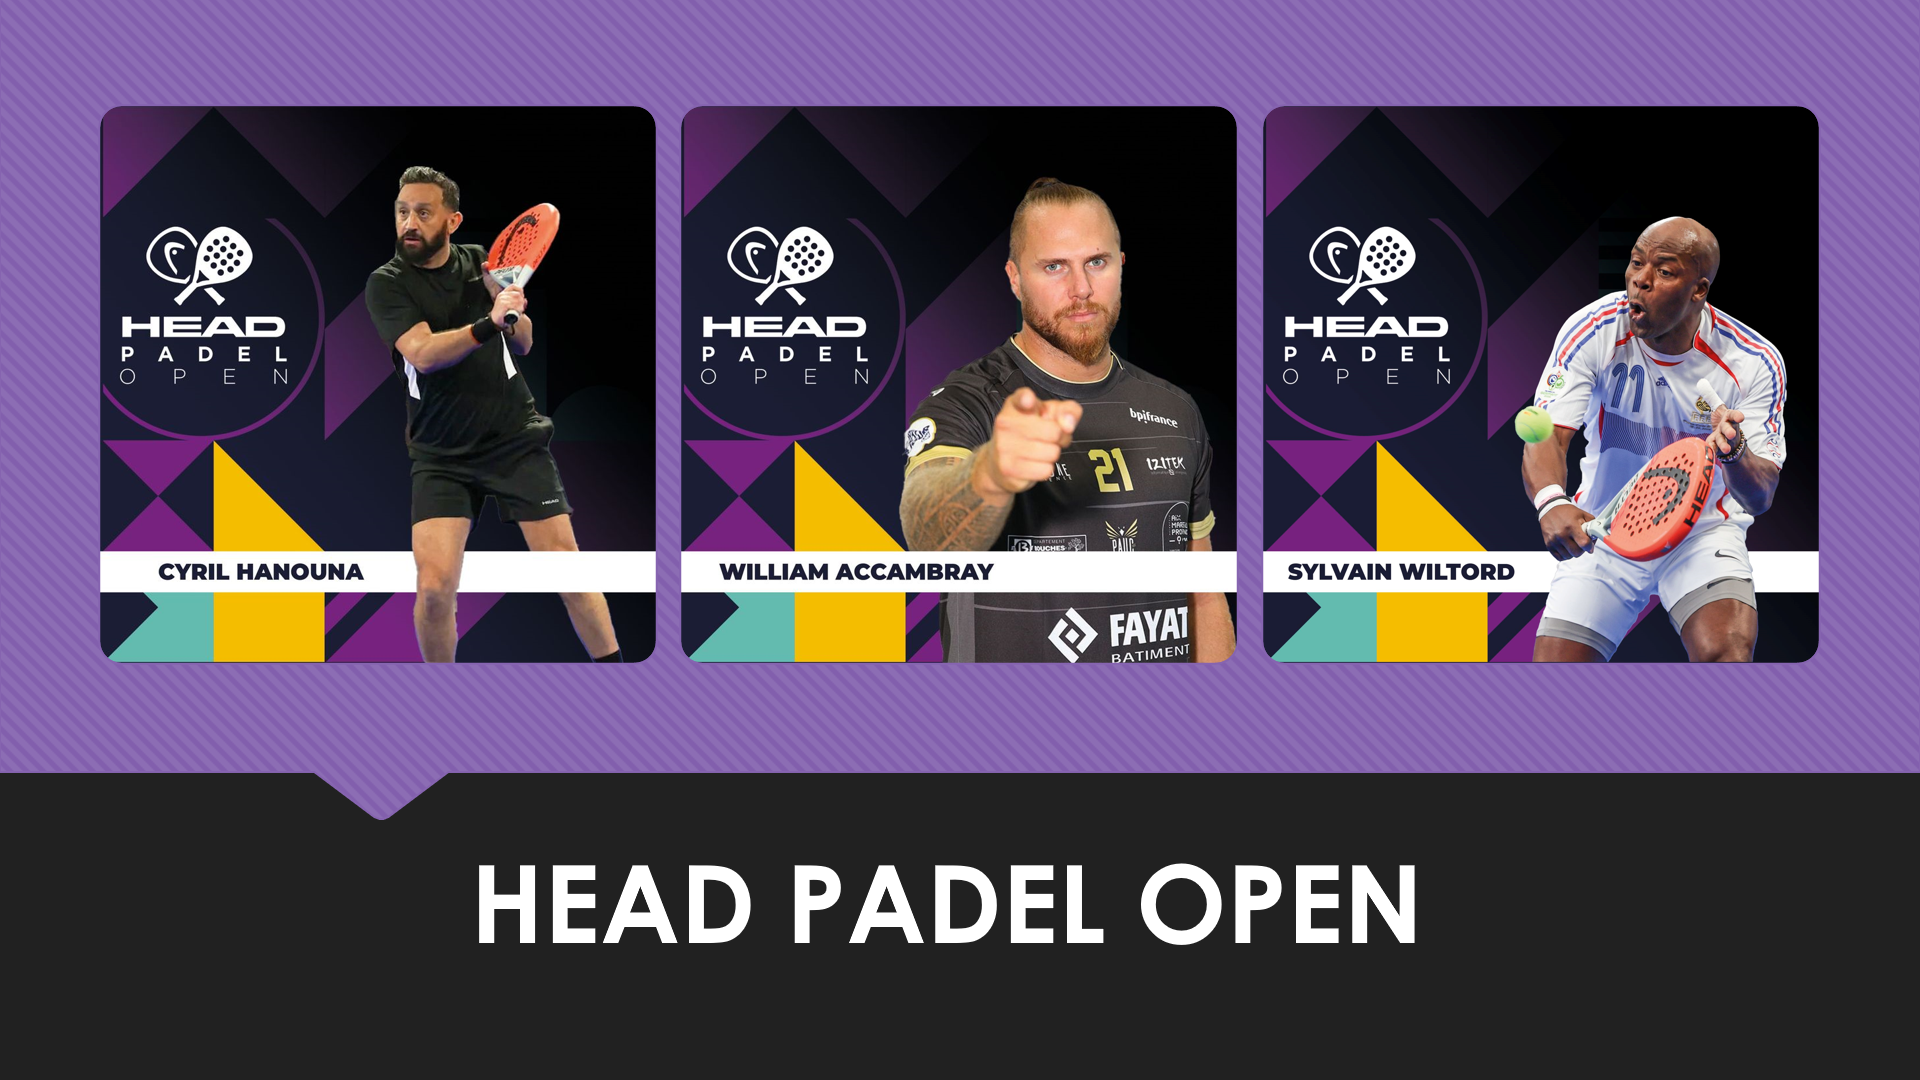 Elsa Pellegrini 和 Simon Guyet 告诉我们关于 Head Padel Open